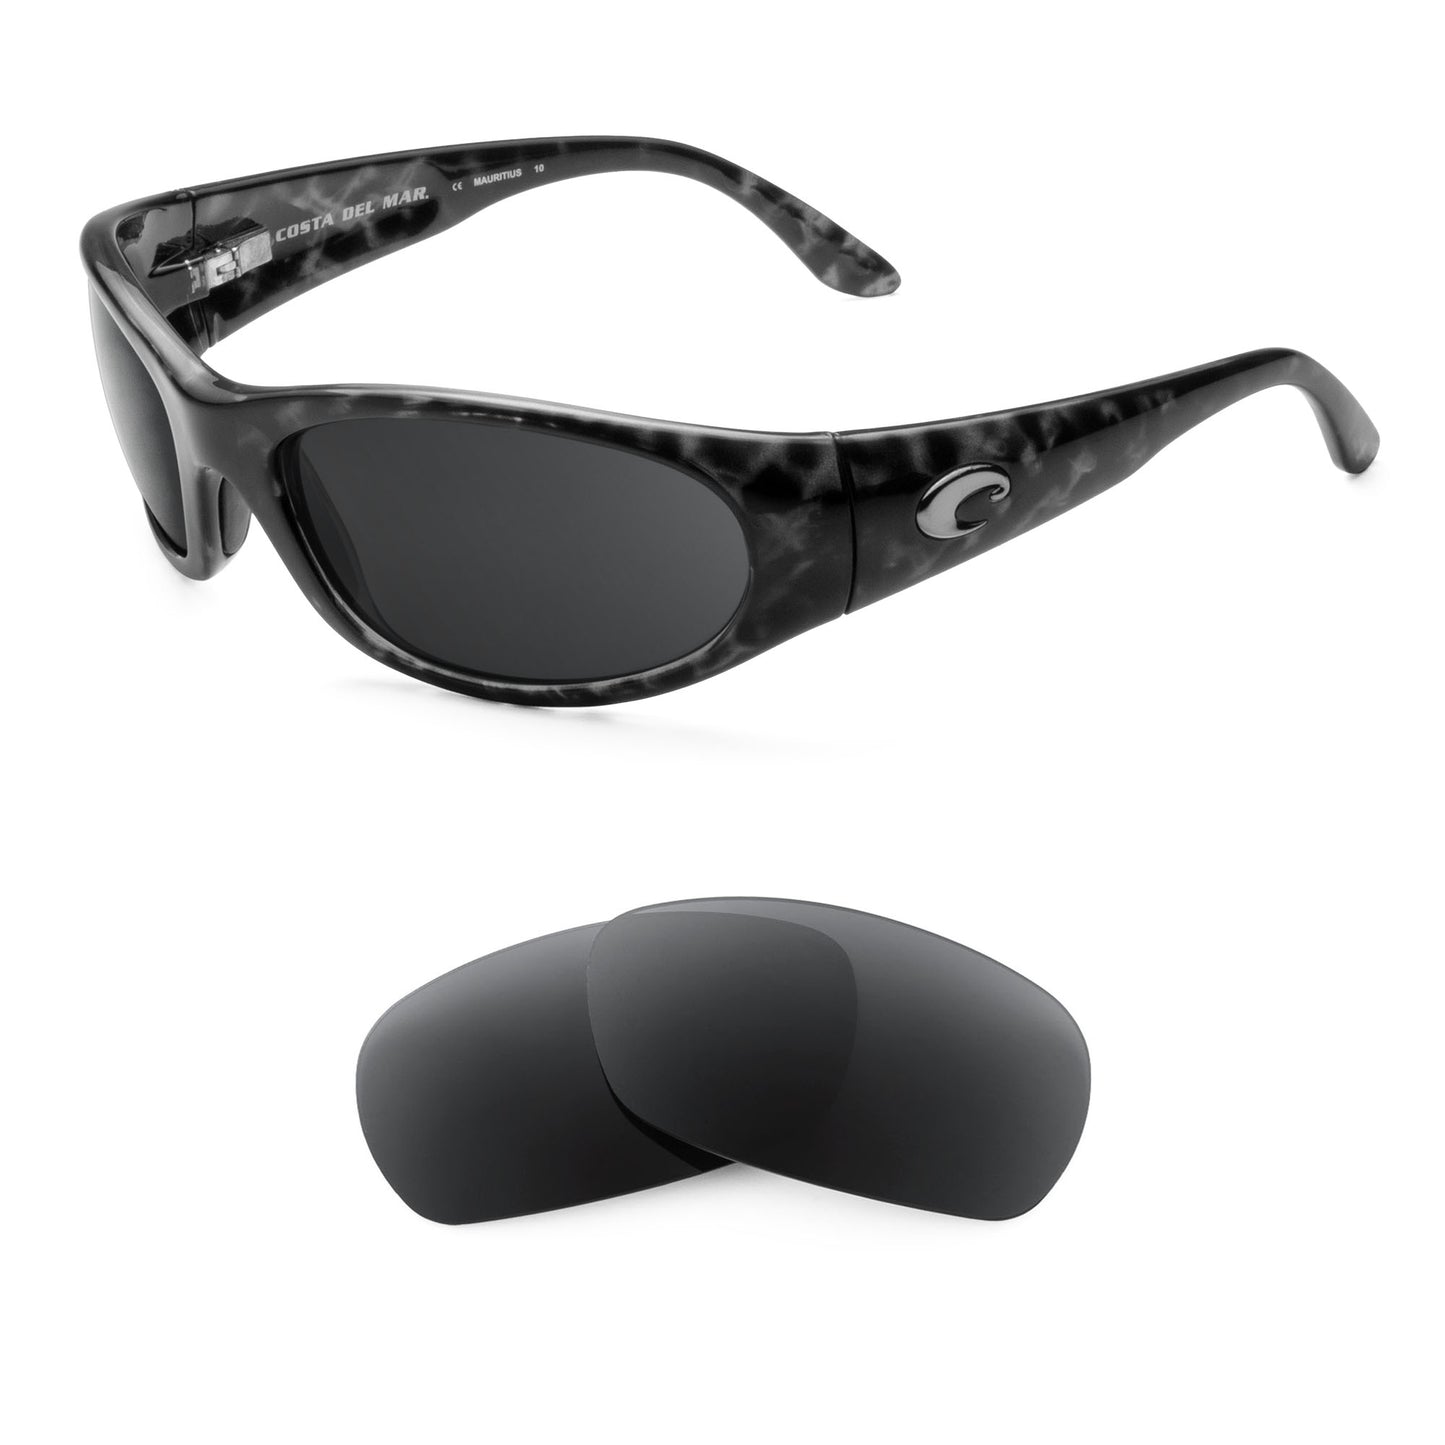 Costa Swordfish sunglasses with replacement lenses